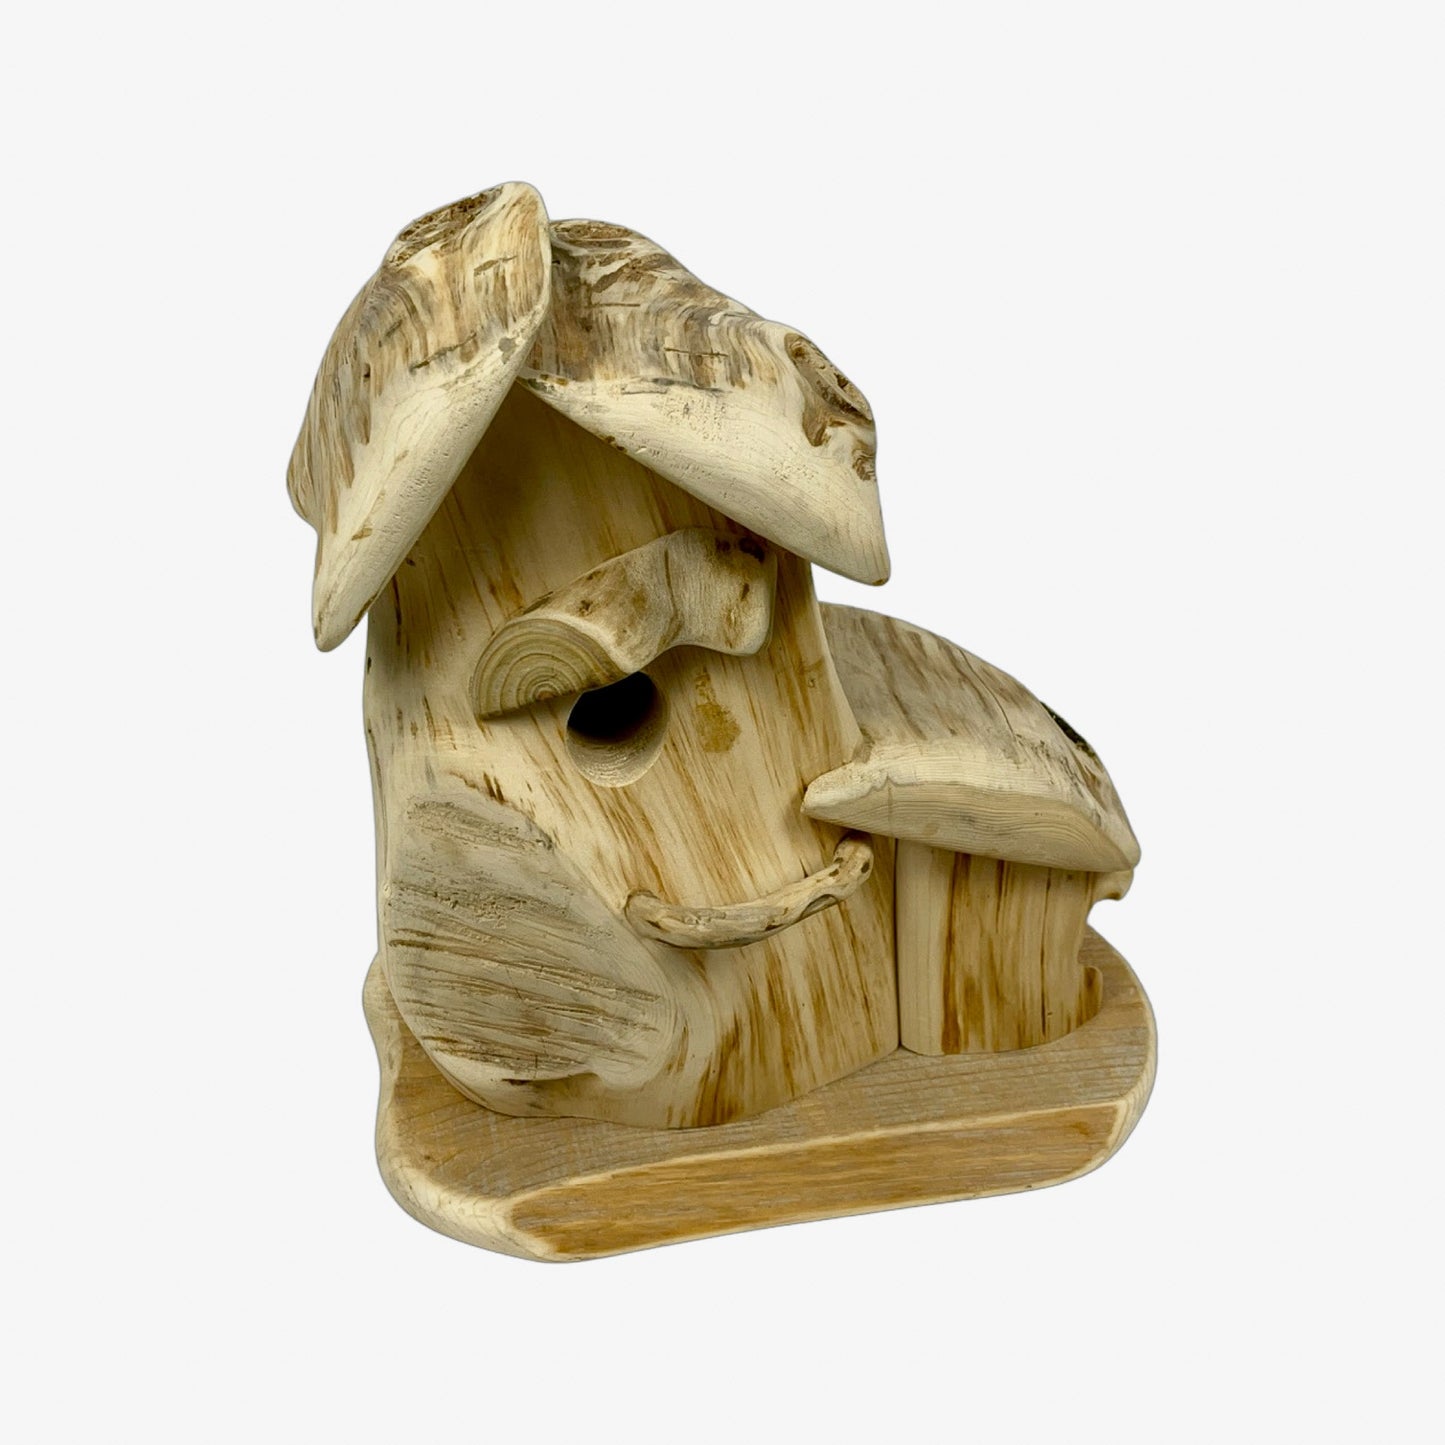 A hand made Birdhouse made from Cedar Wood